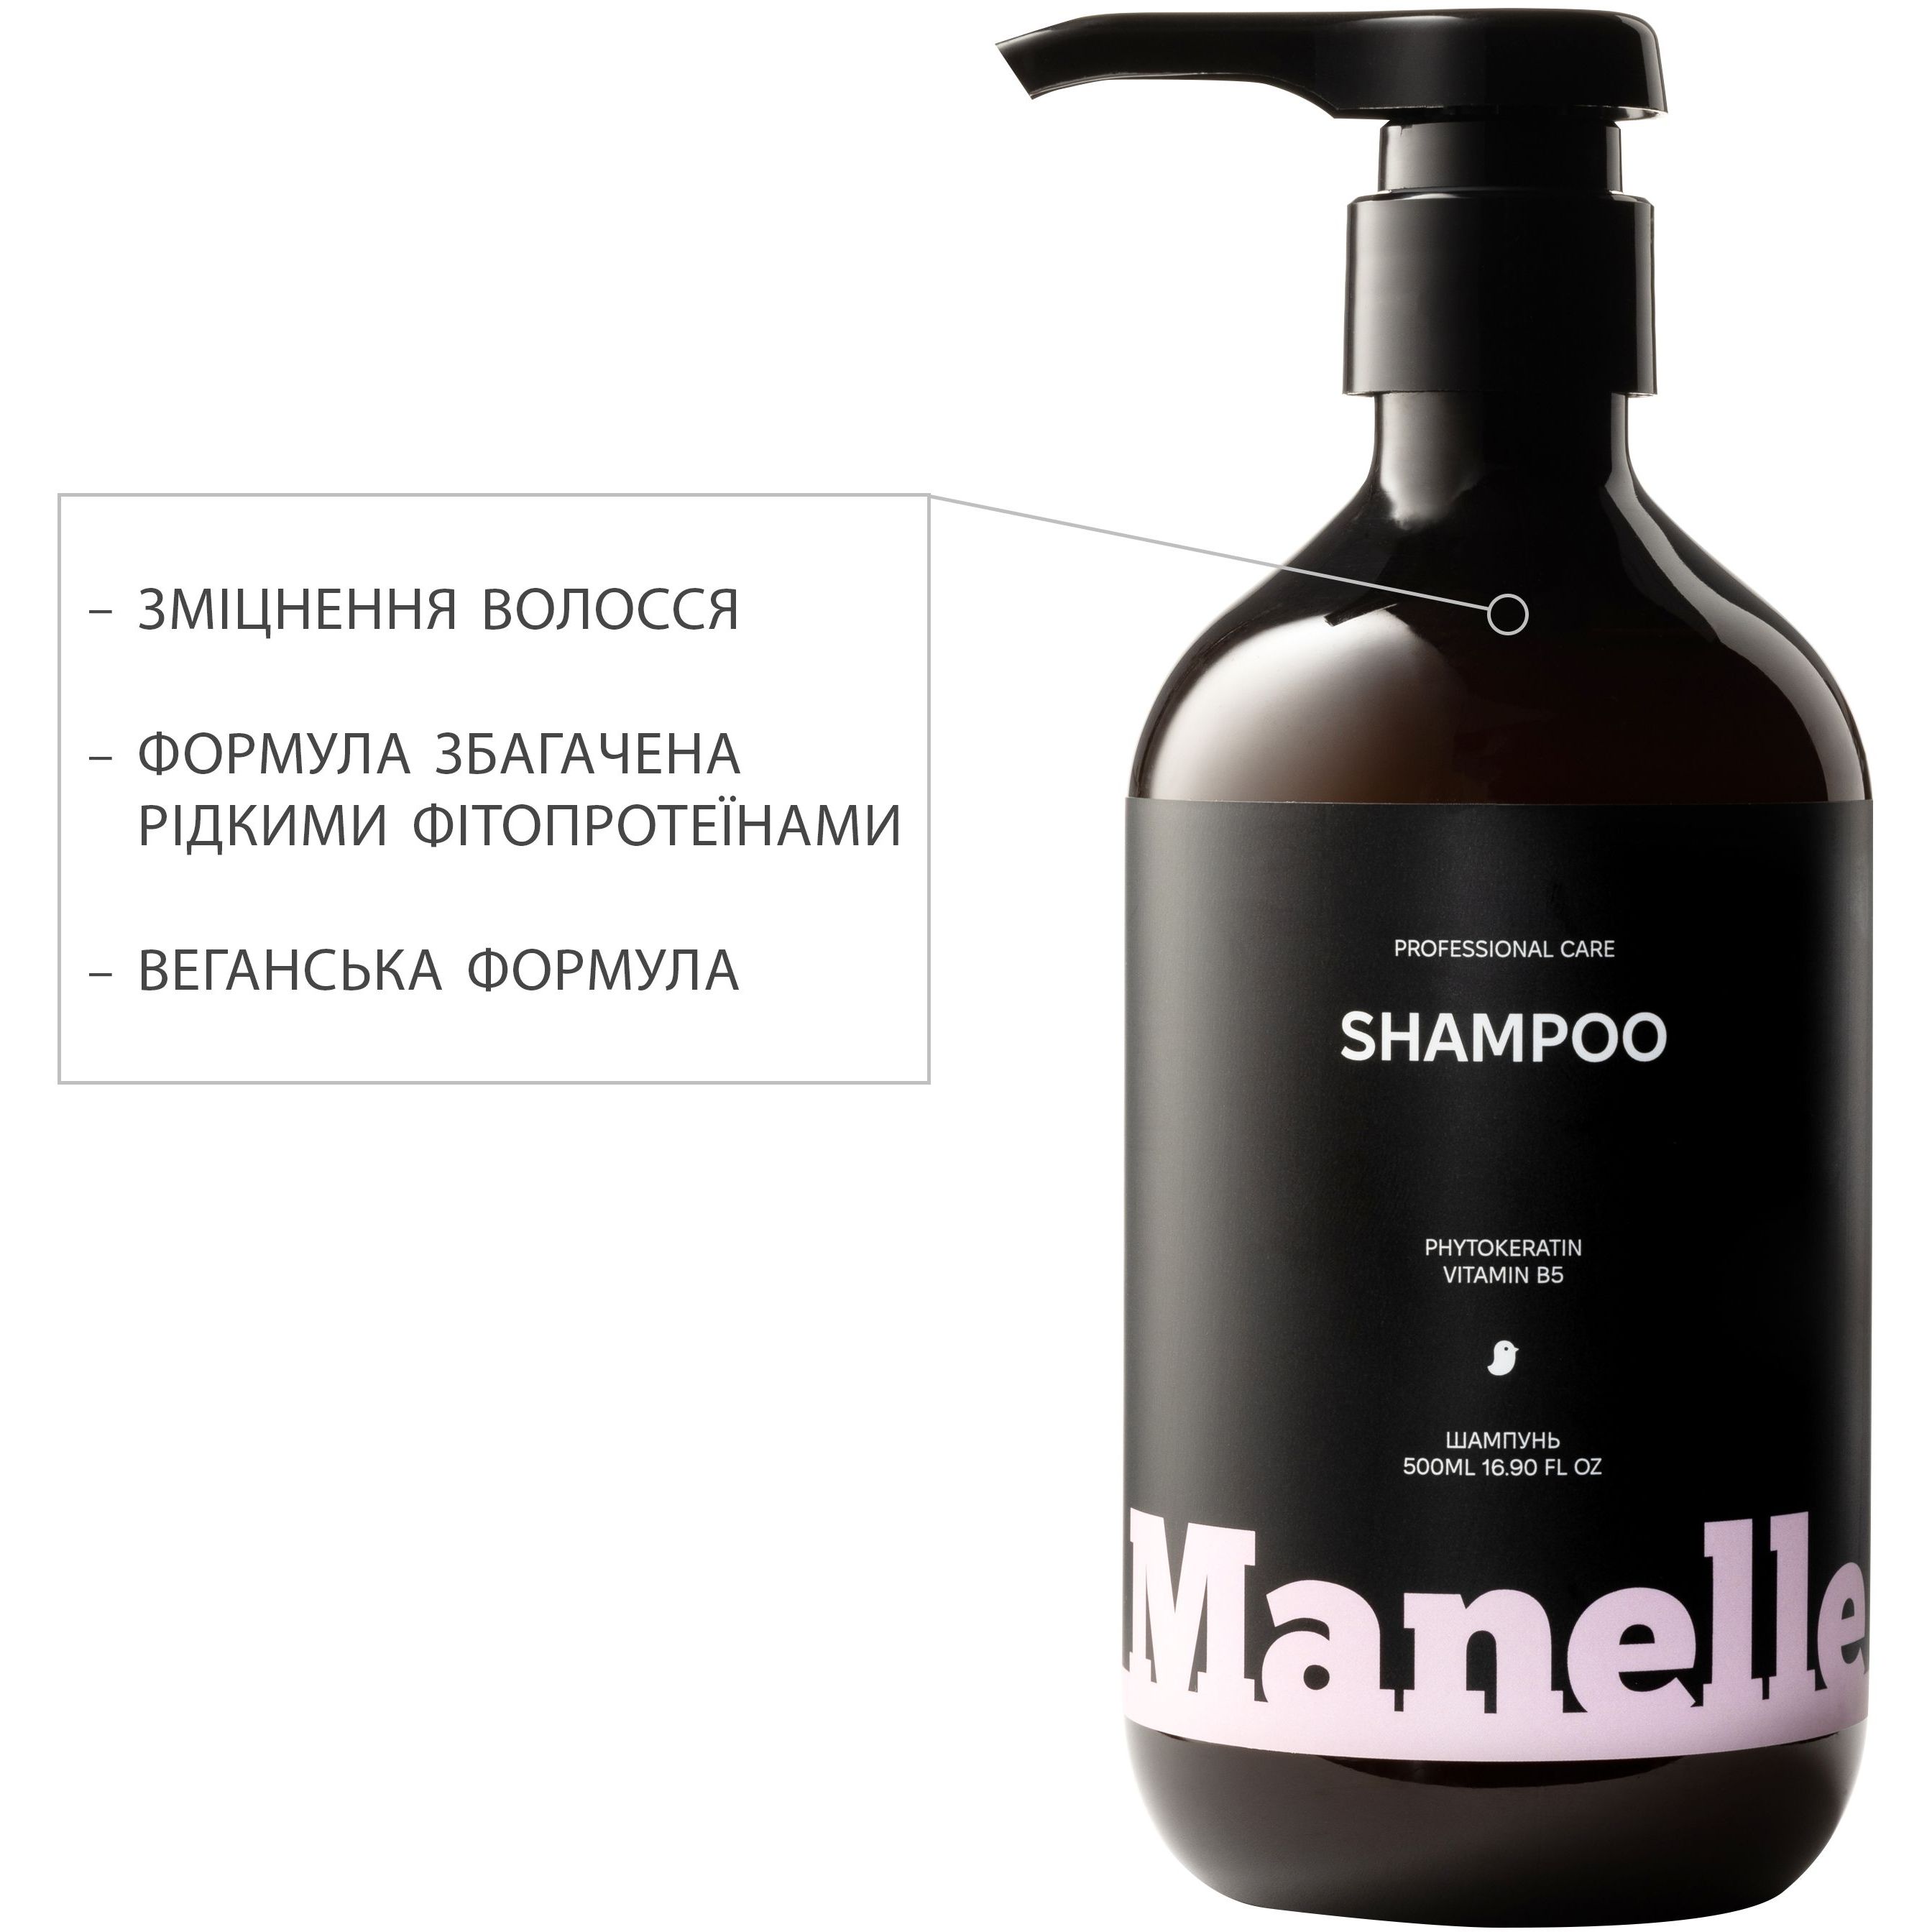 Бессульфатный шампунь Manelle Рrofessional care Phytokeratin vitamin B5 500 мл - фото 2